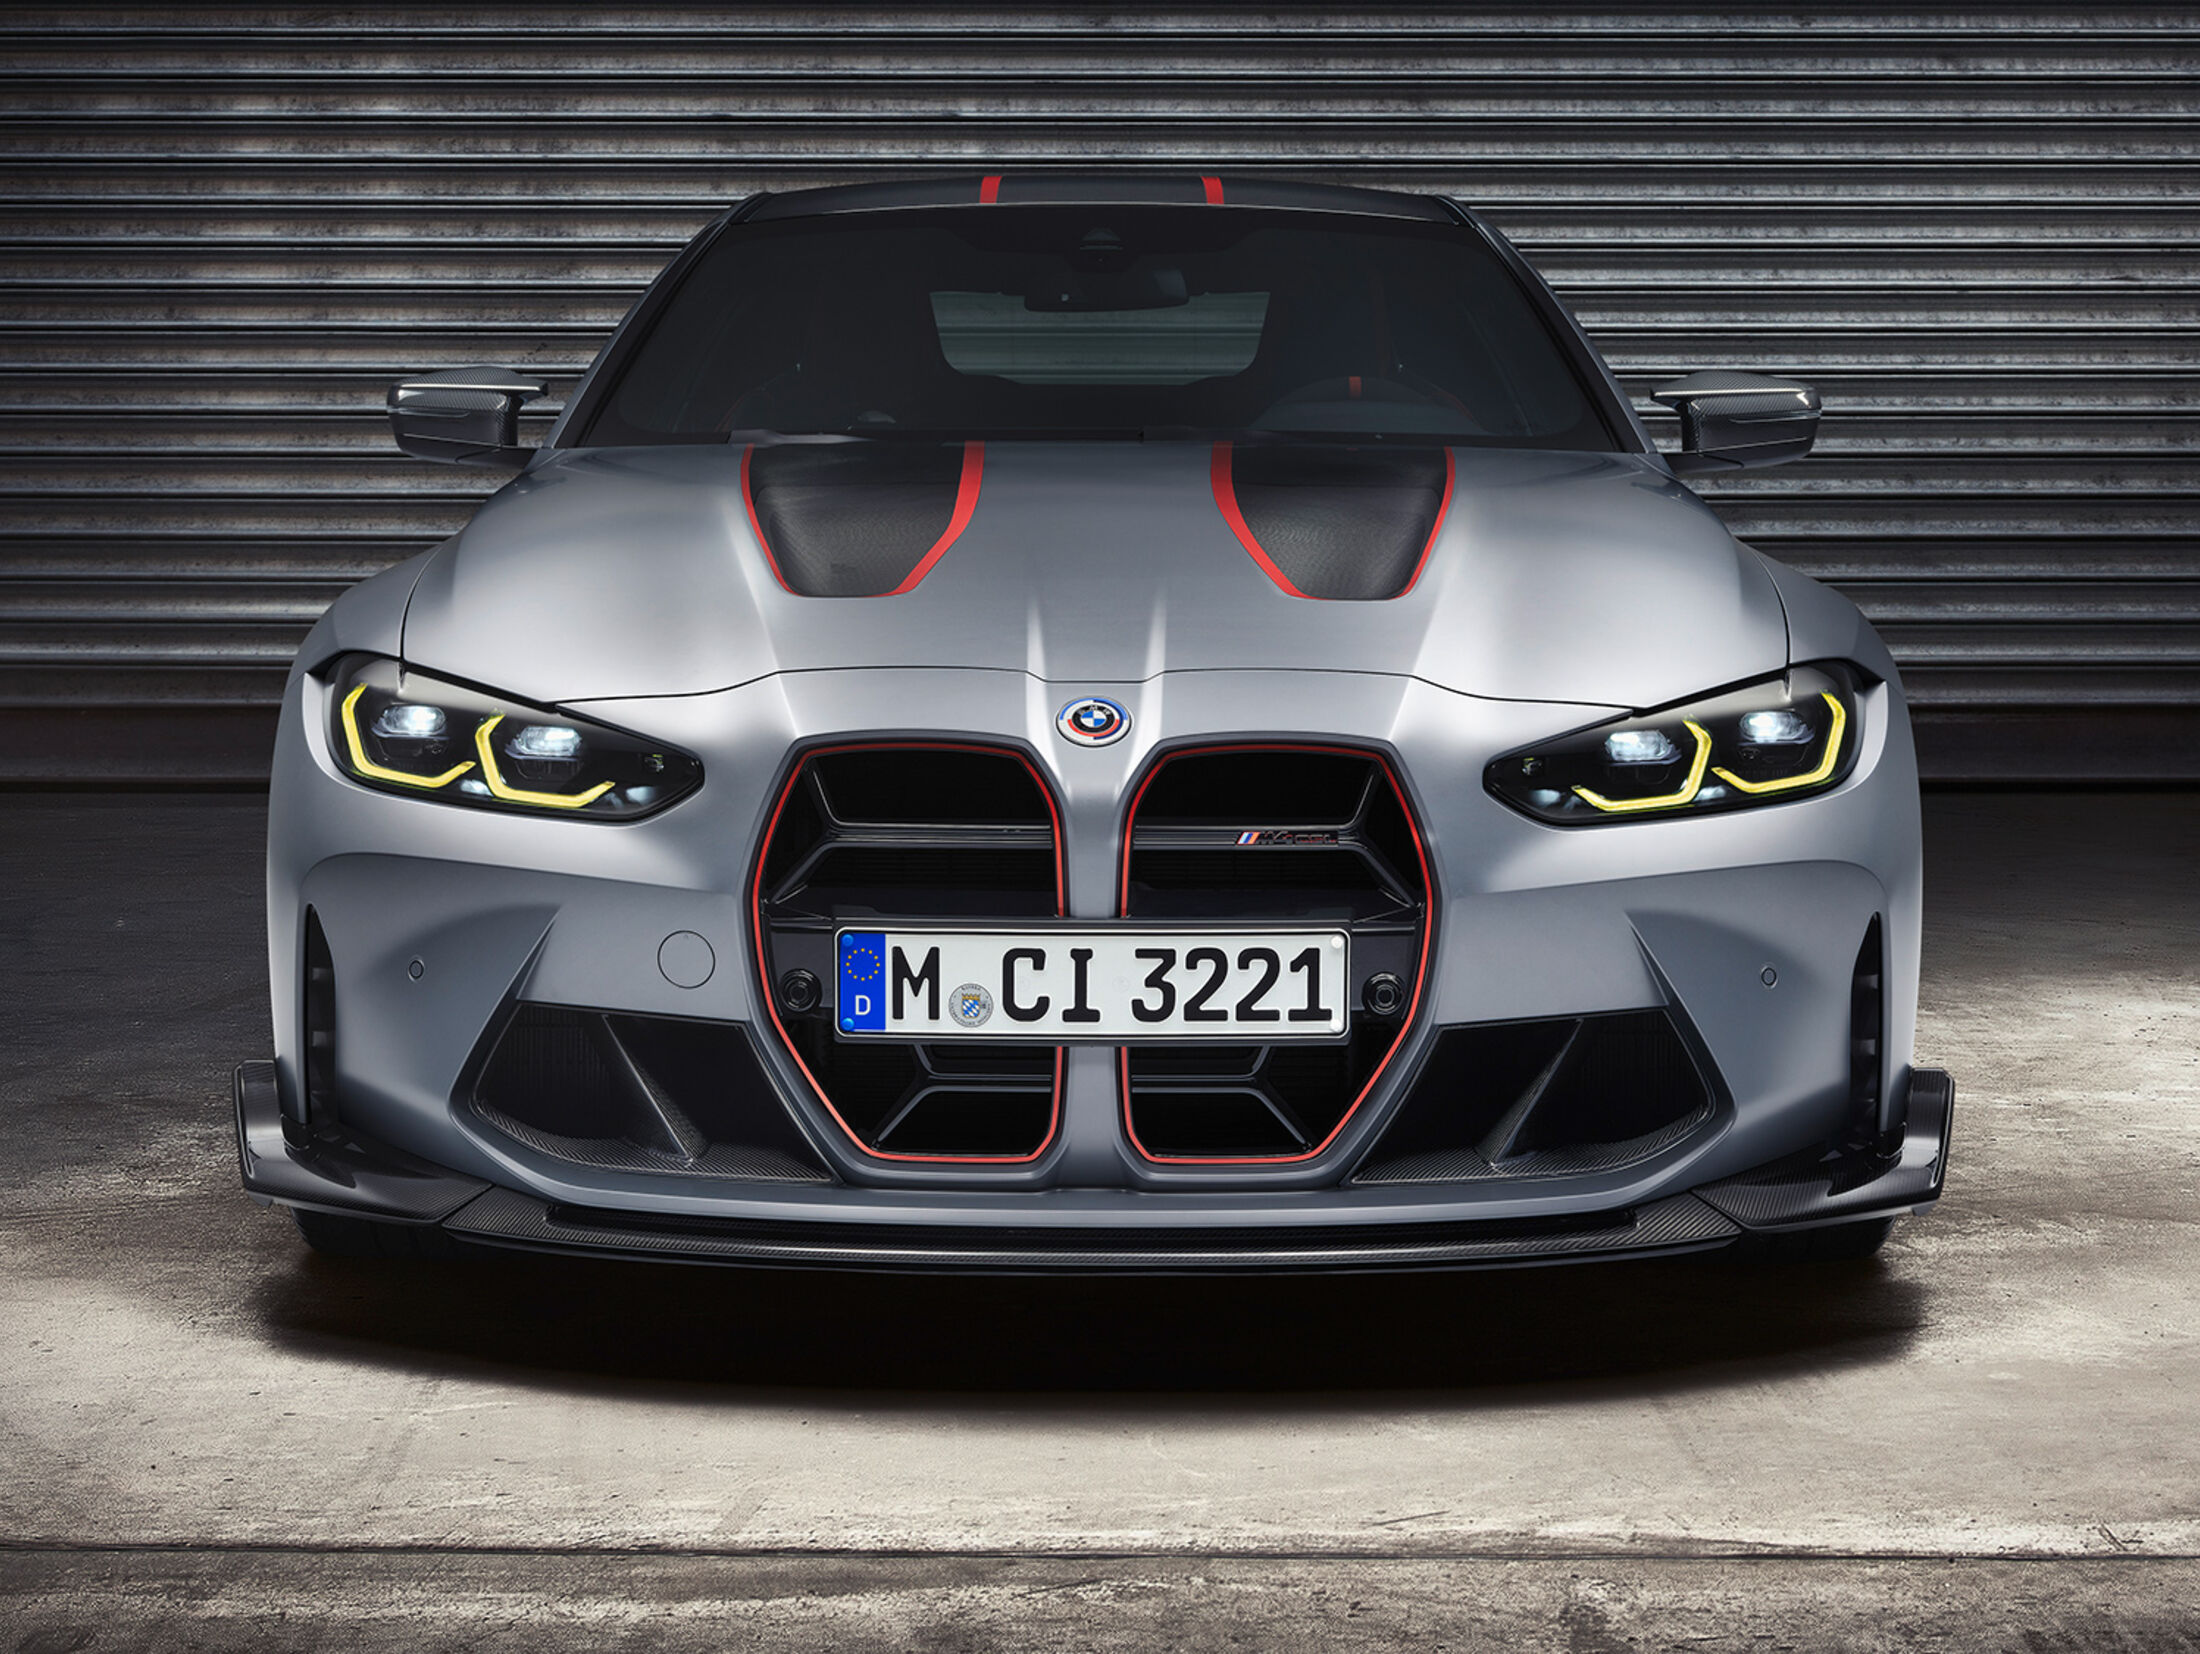 2023 BMW M4 Csl 2022 Performance